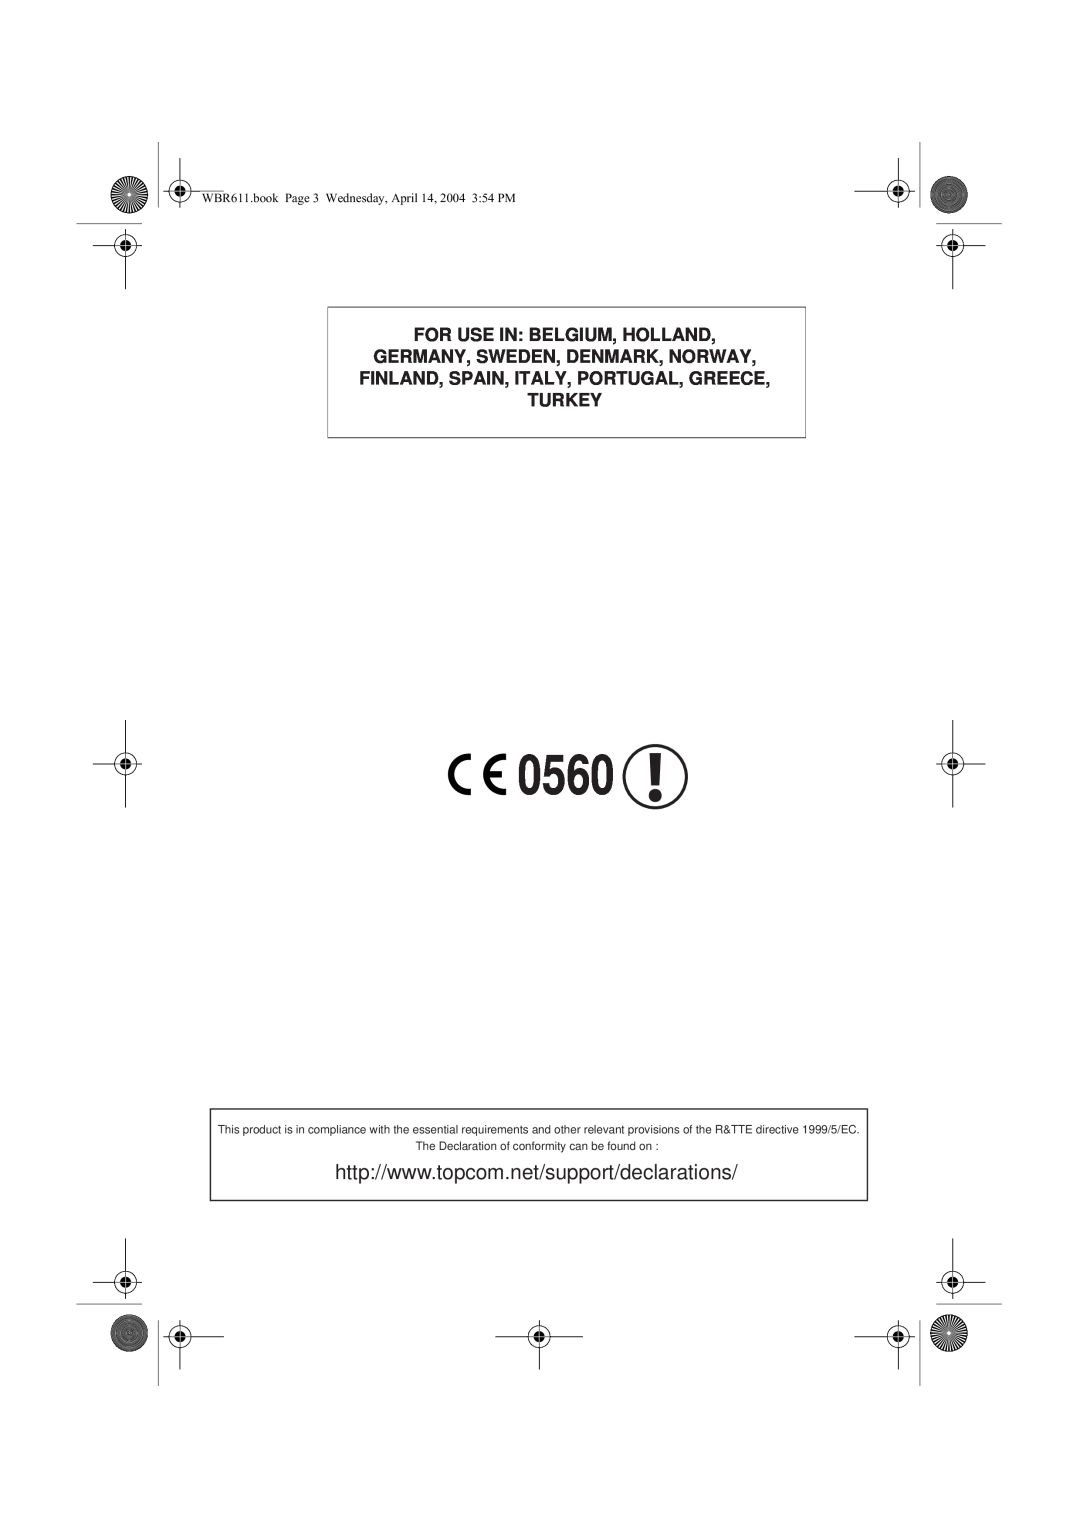 Topcom WBR 611 manual do utilizador For Use In Belgium, Holland Germany, Sweden, Denmark, Norway, 0560 